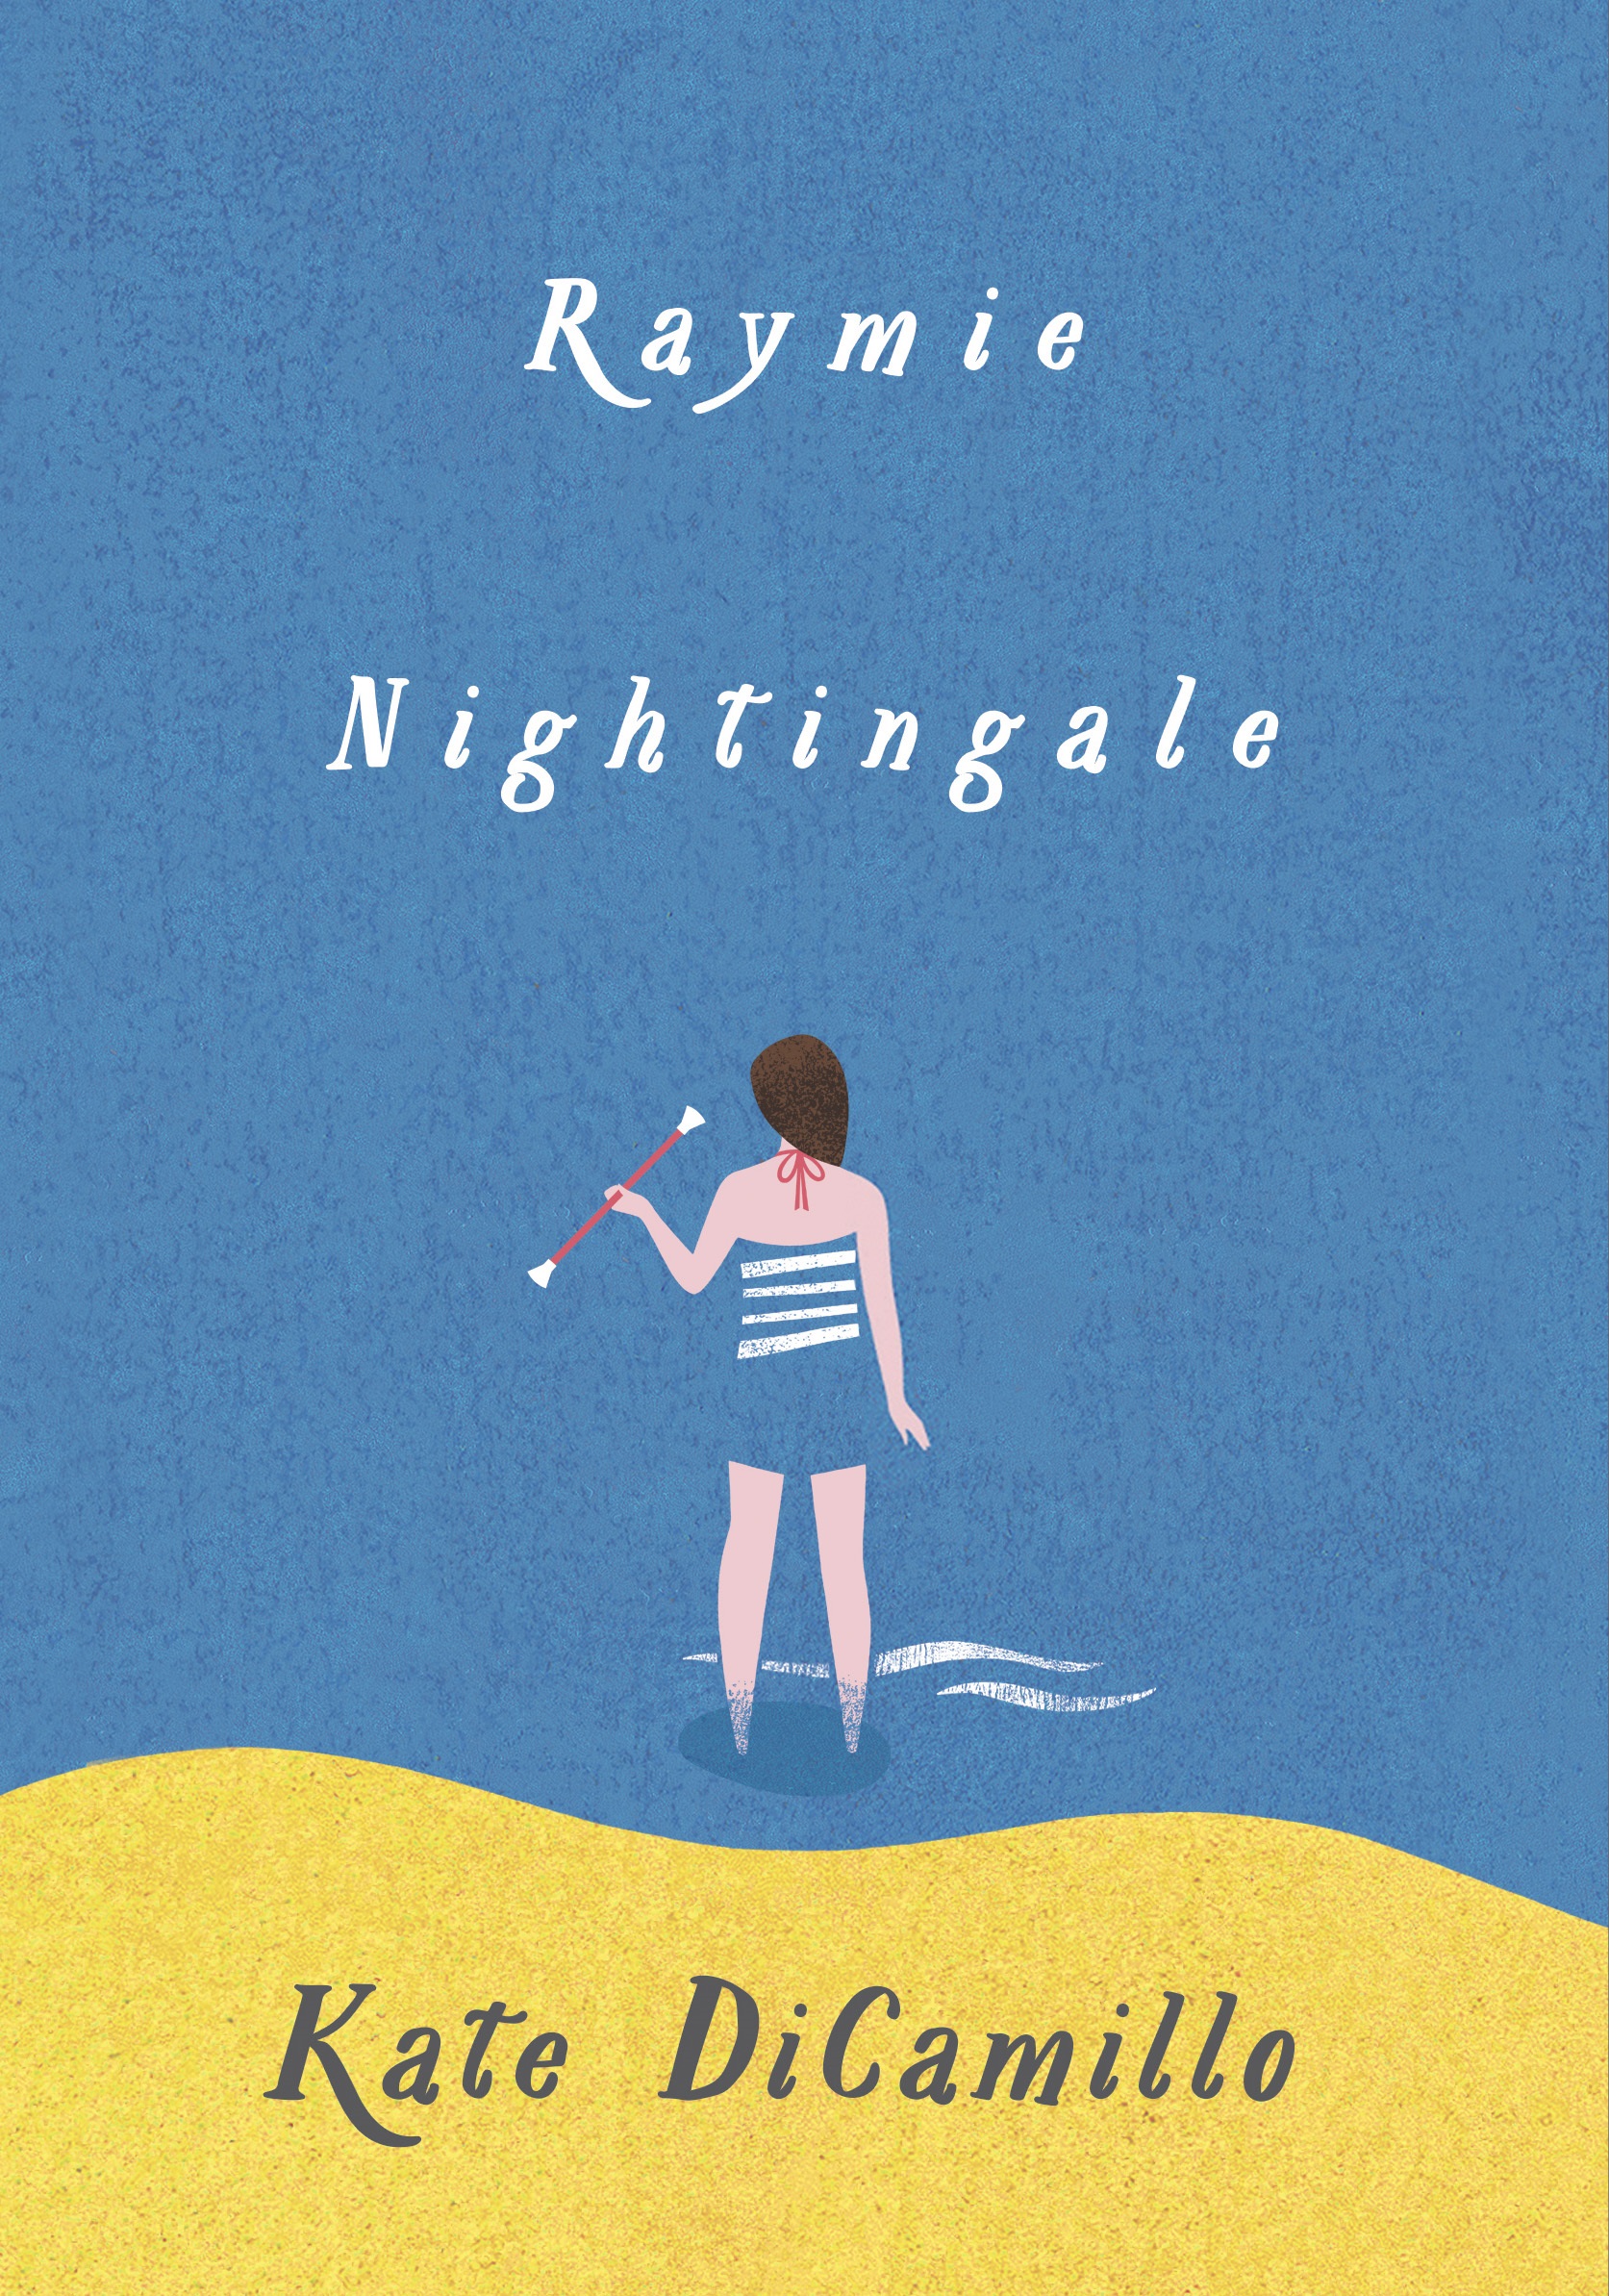 "Raymie Nightingale" Cover Art